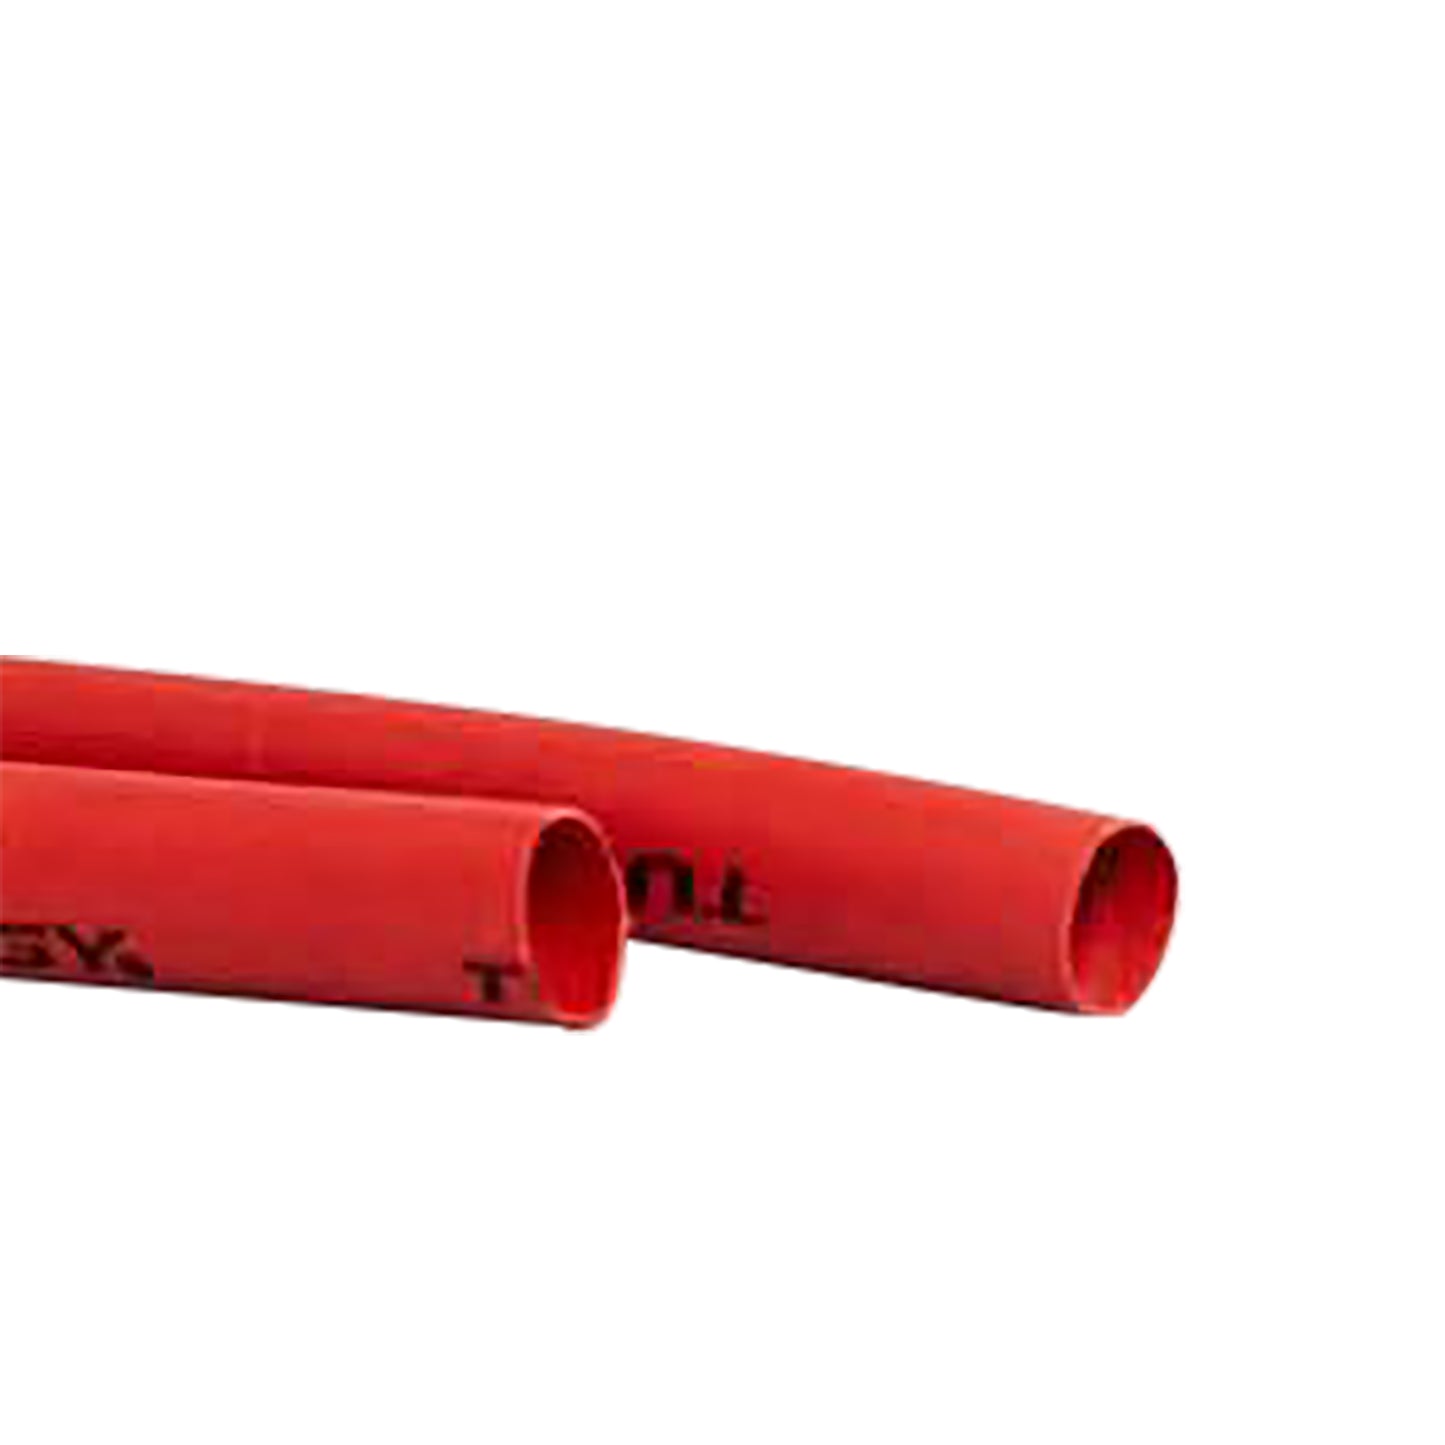 Flexible Thin Single Wall Non-Adhesive Heat Shrink Tubing 2:1 Red 3/32" ID - 100' Ft Spool